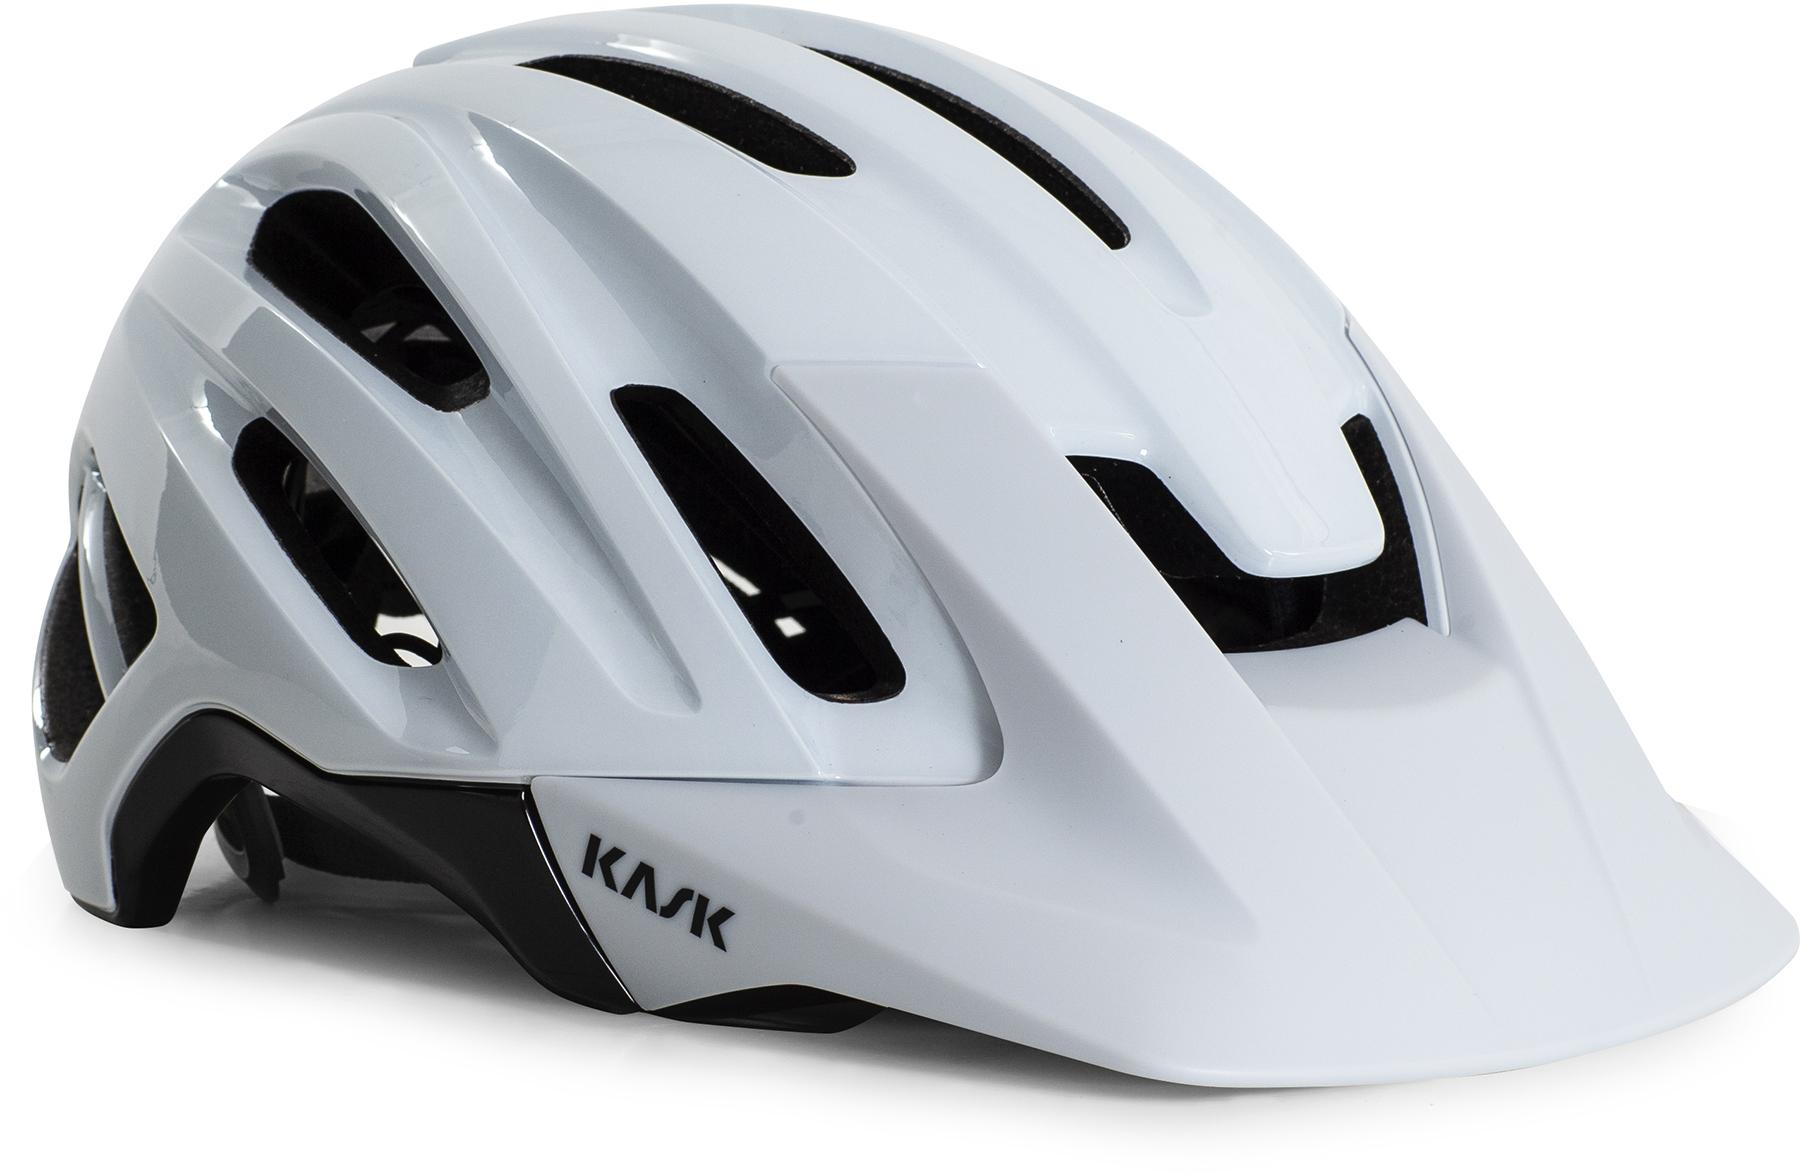 Kask Caipi Mtb Cycling Helmet (wg11) - White